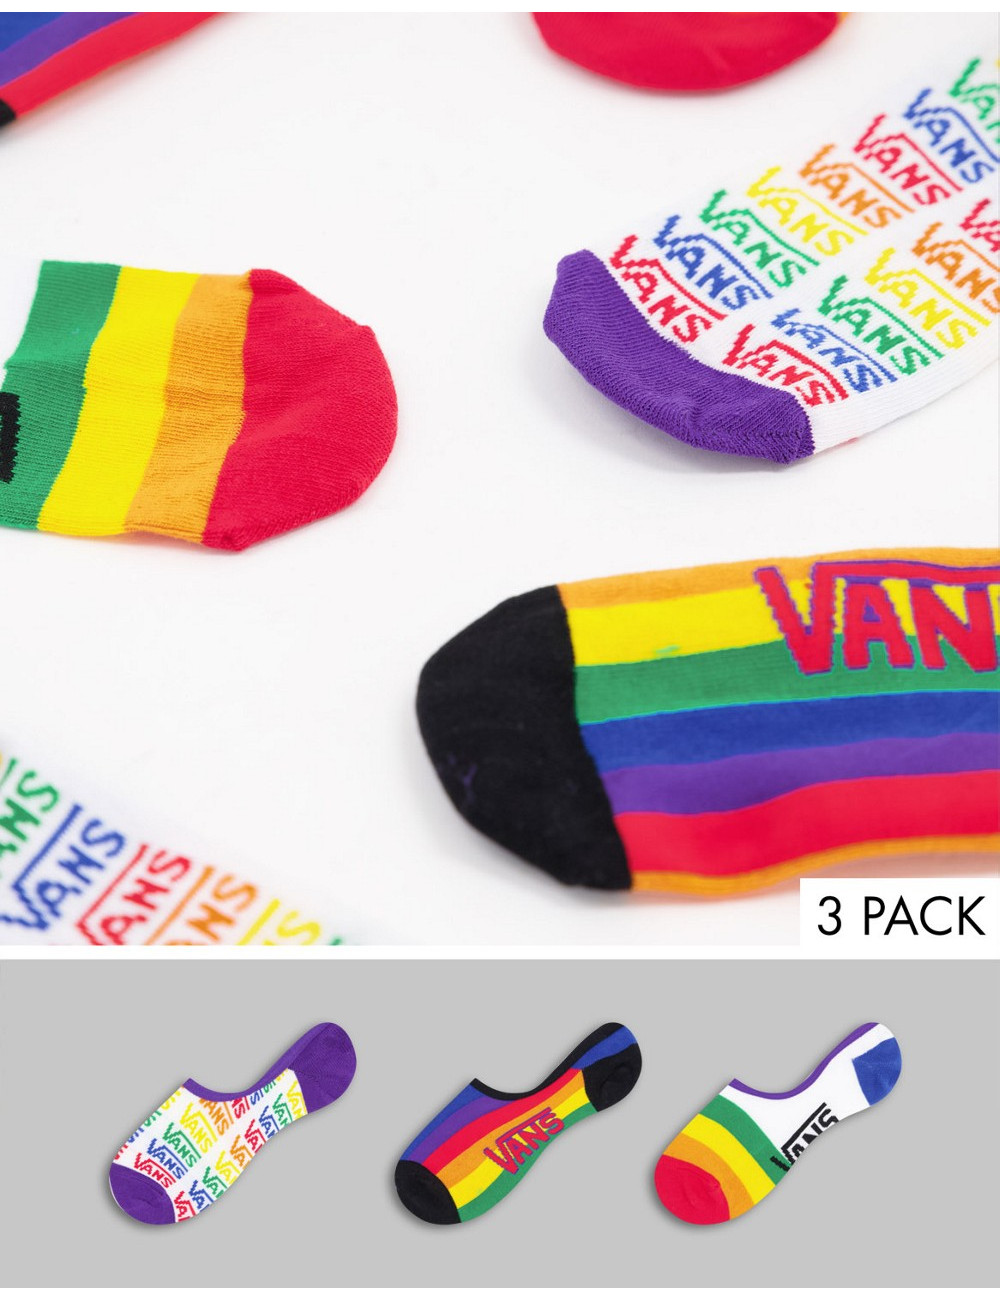 Vans Rainbow canoodles...